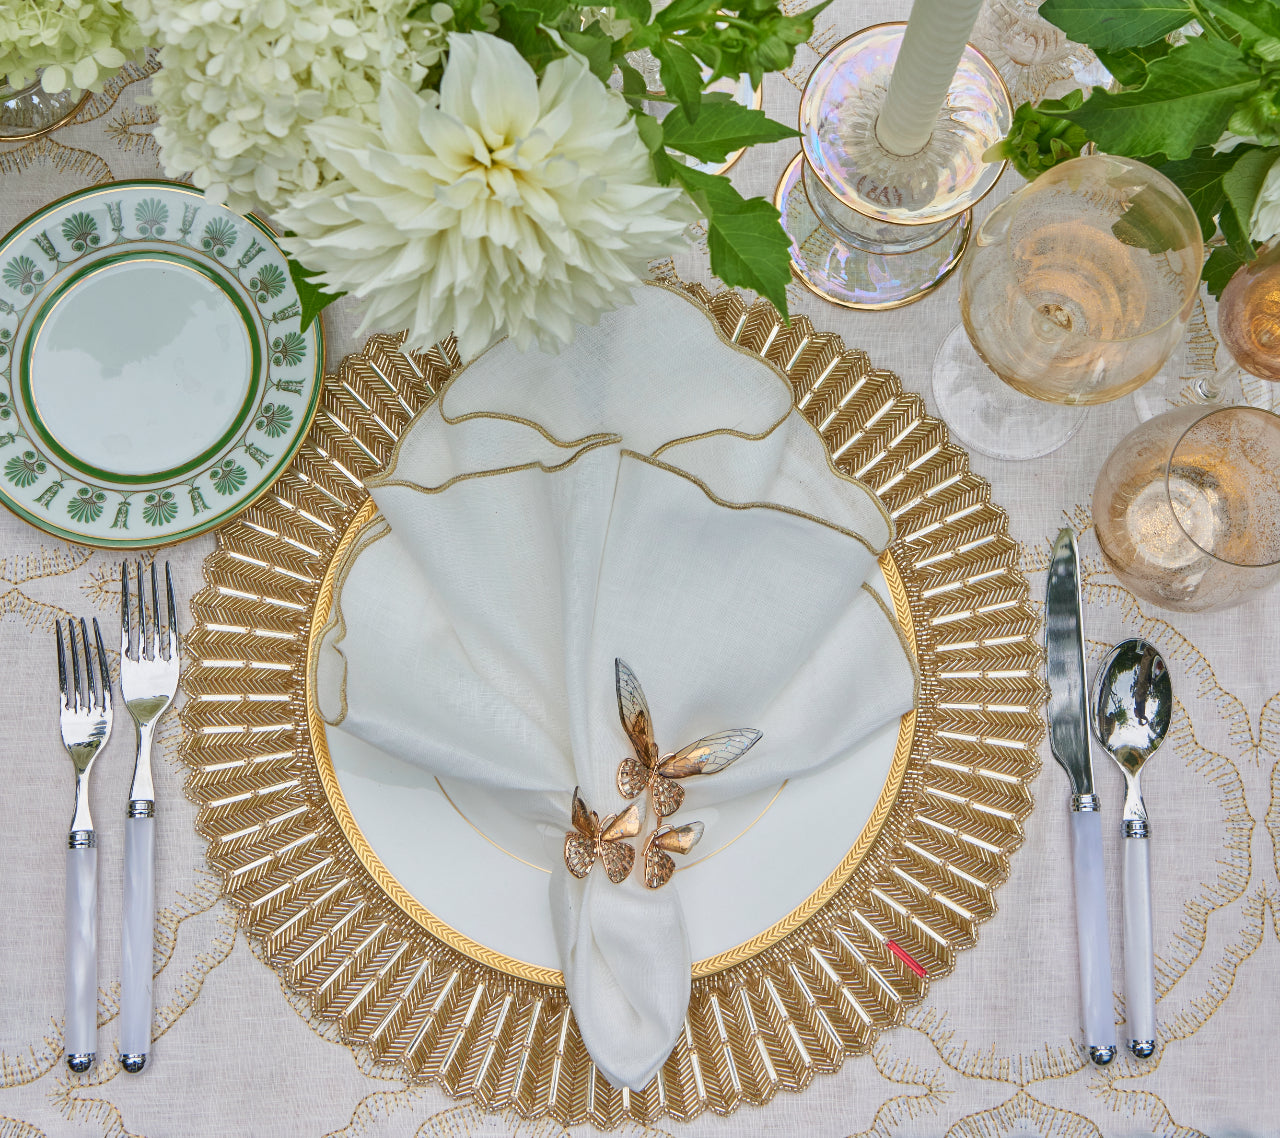 Kim Seybert Luxury Daydream Tablecloth in White, Gold & Silver